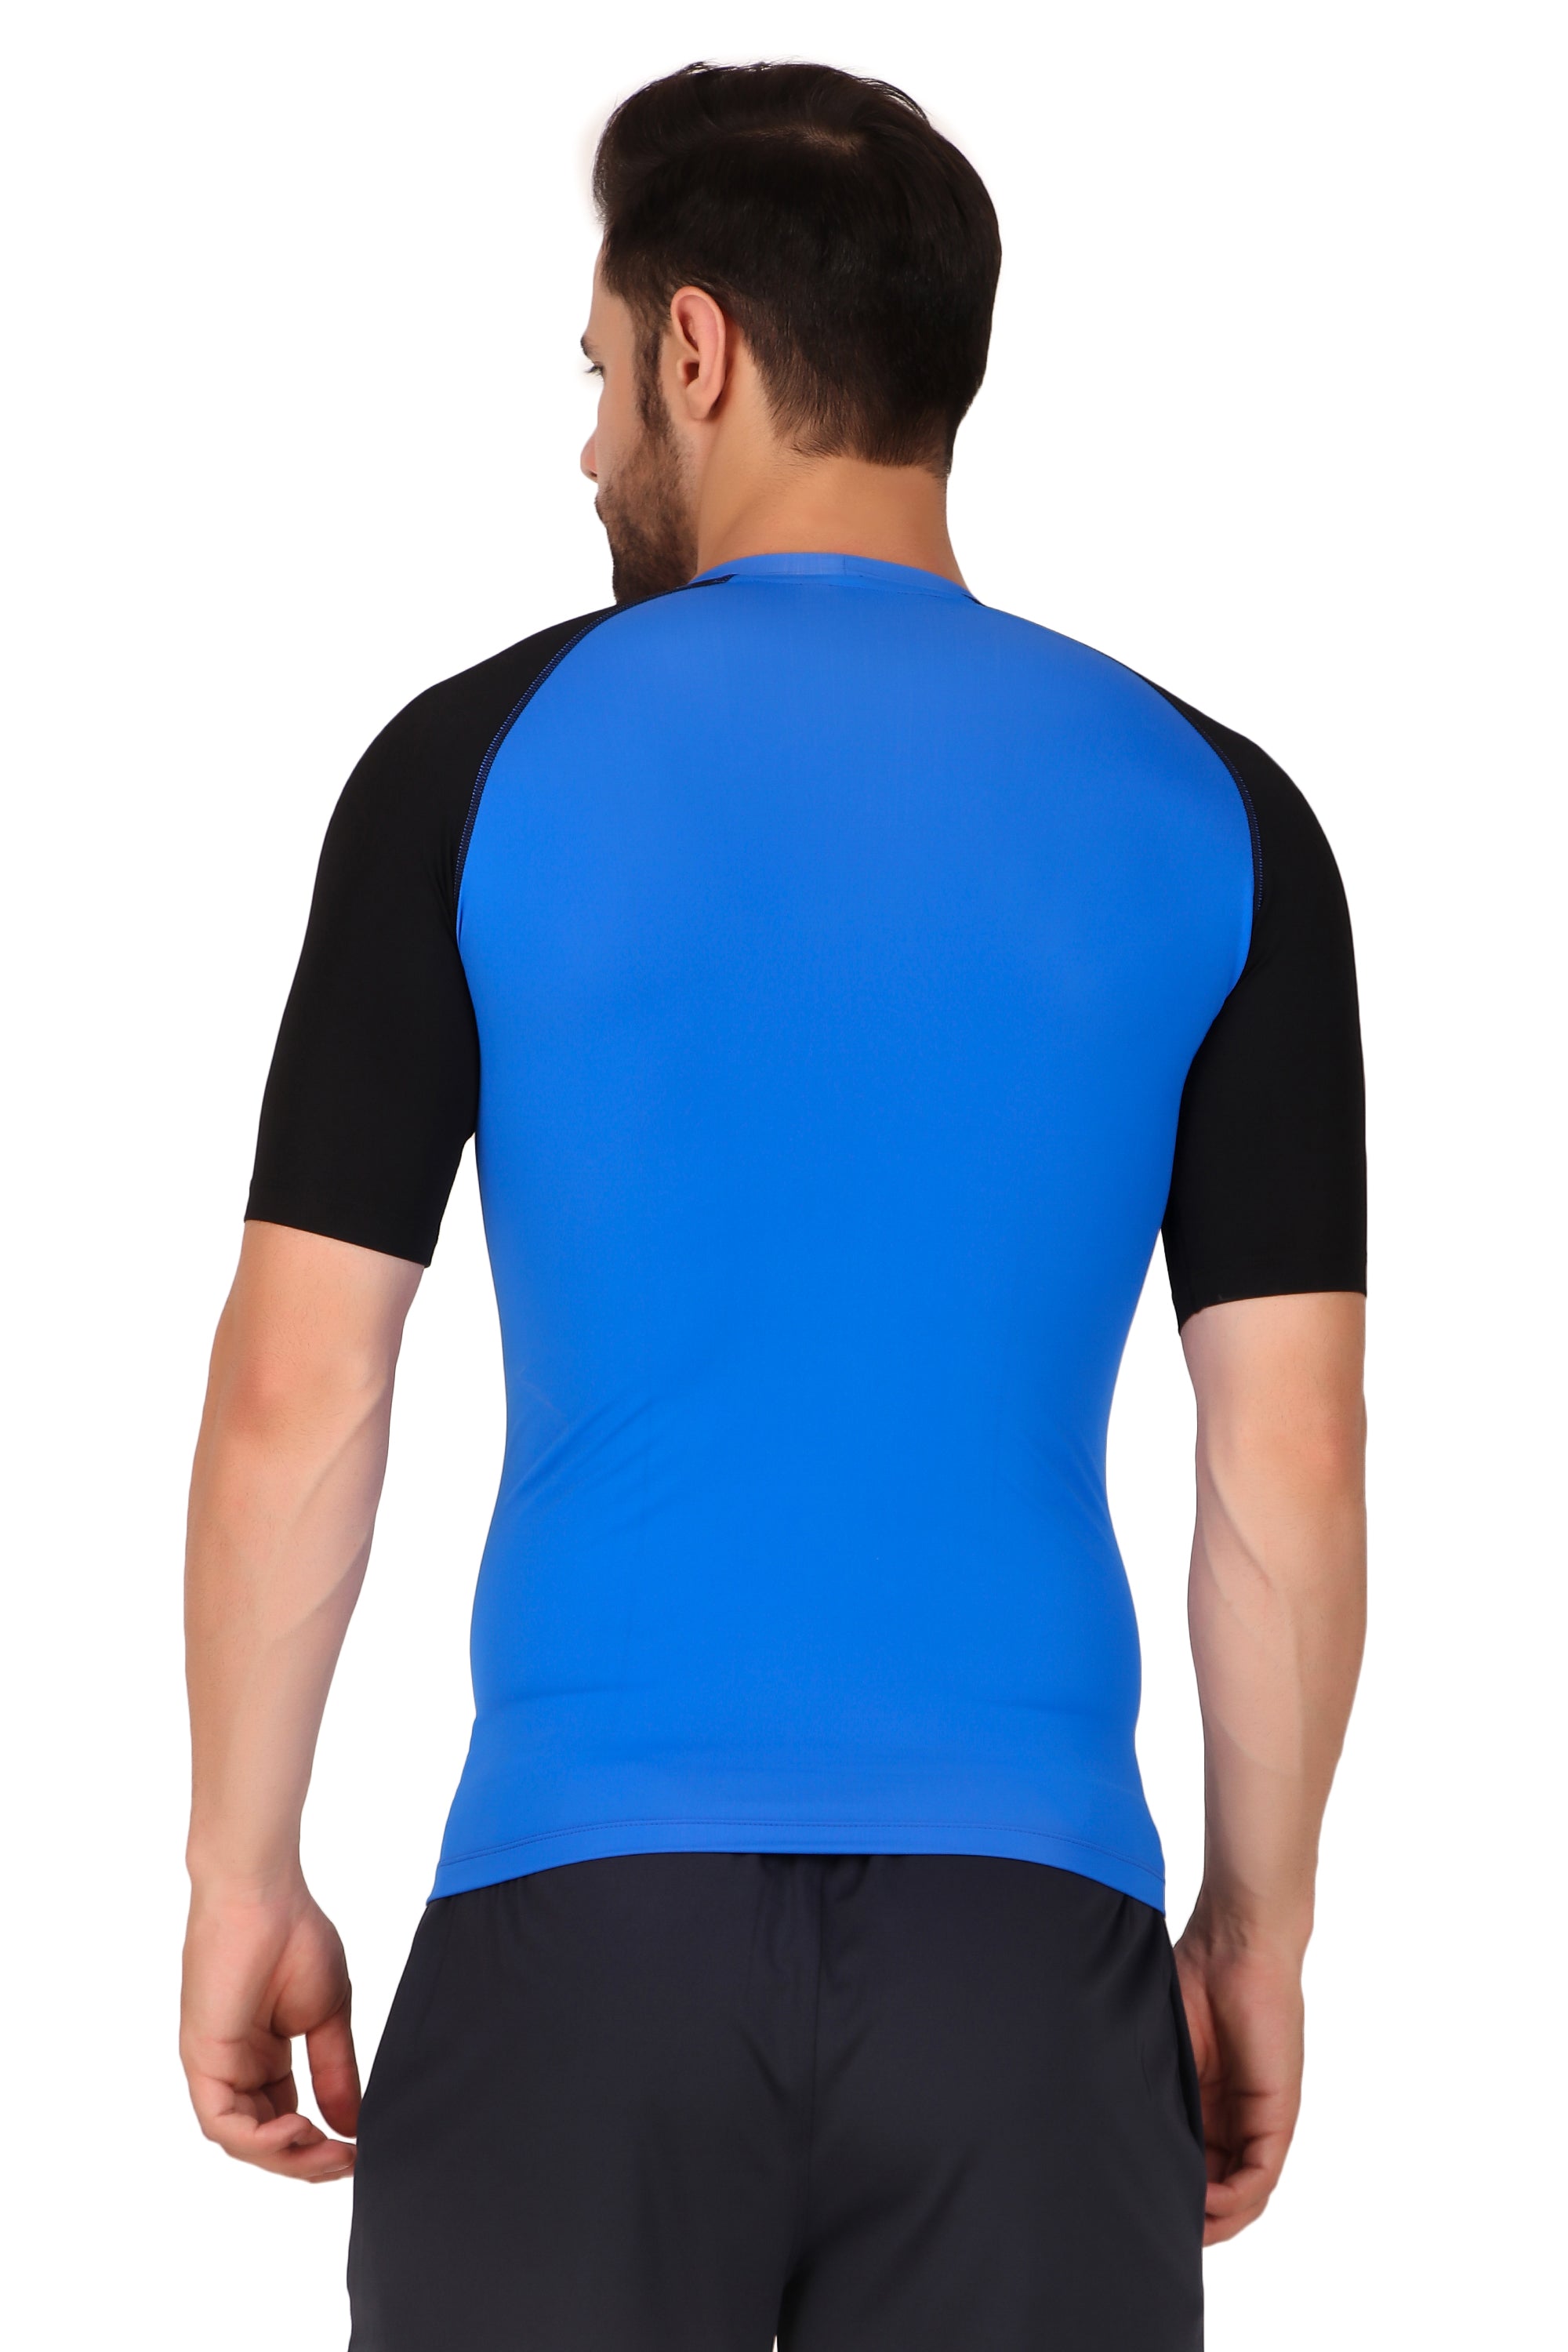 Nylon Compression Tshirt Half Sleeve Tights For Men (Royal Blue/Black)